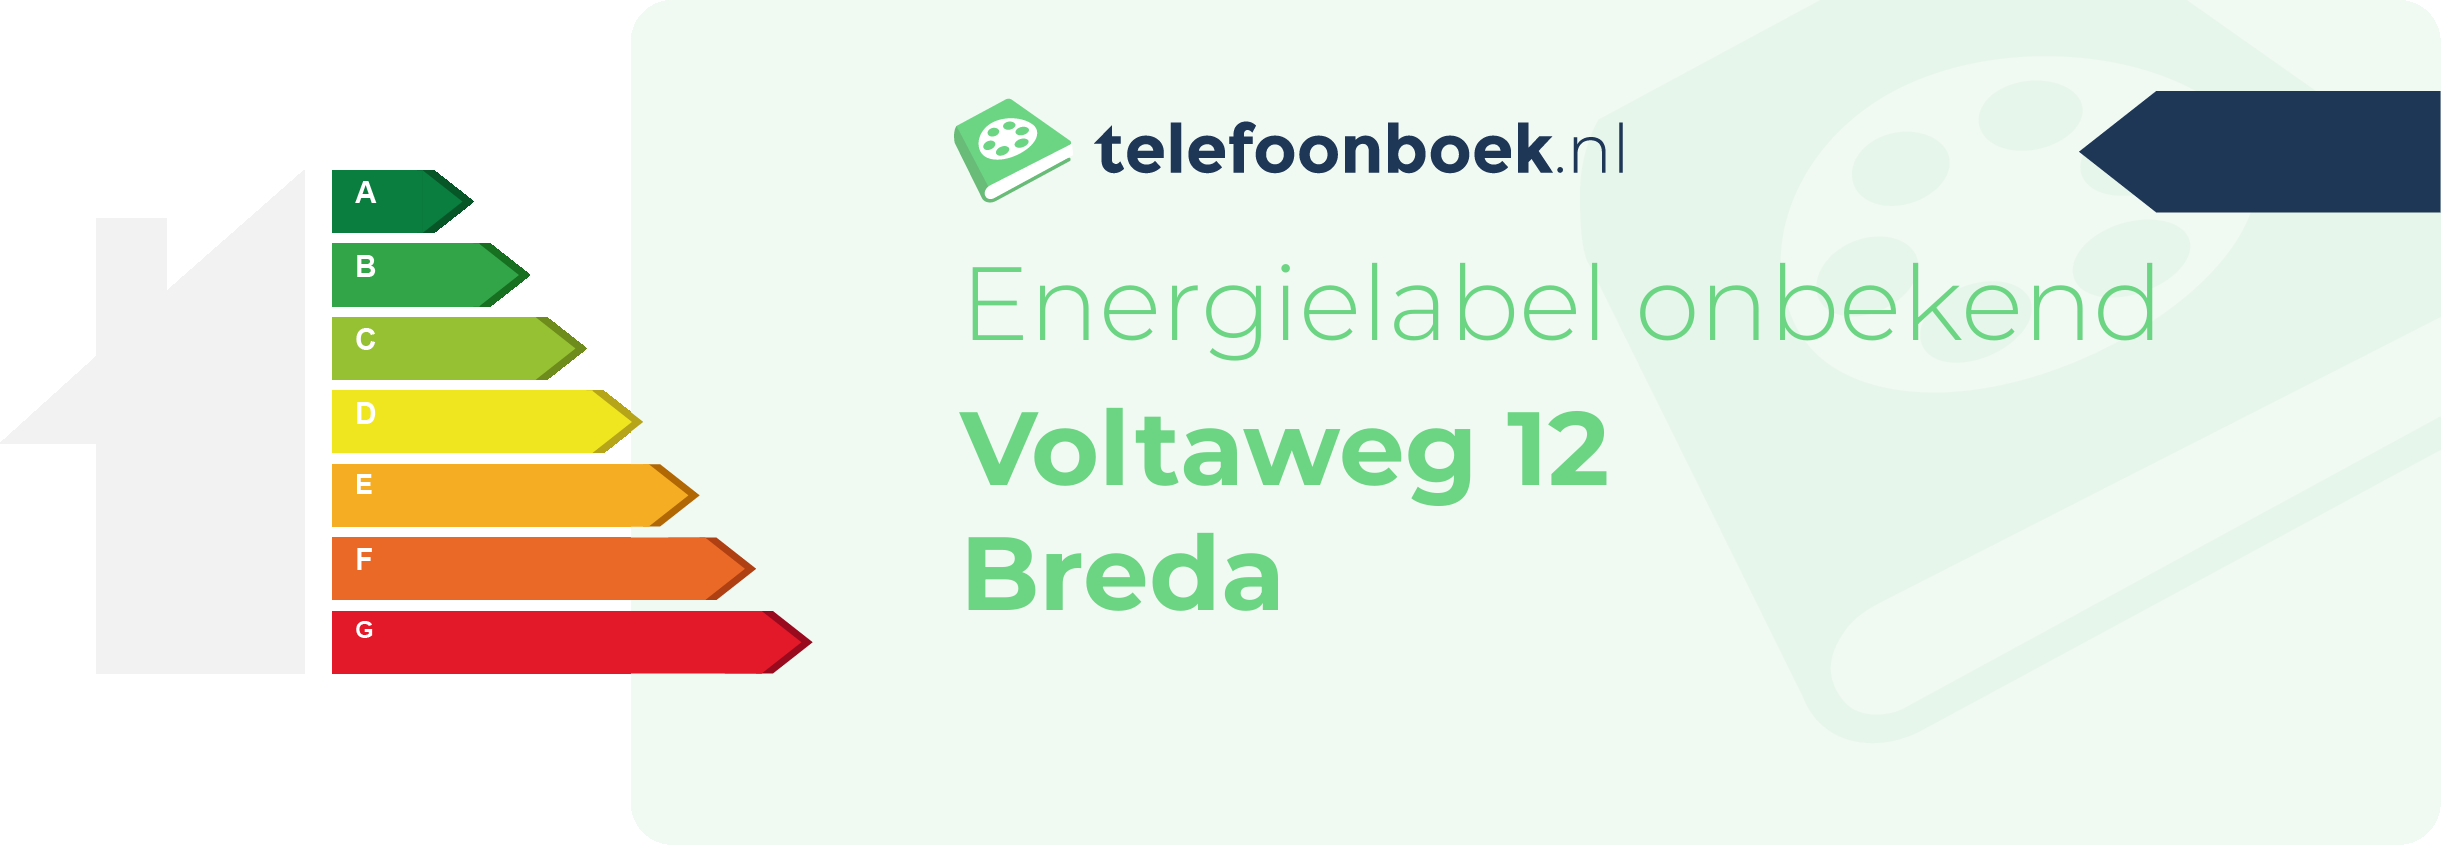 Energielabel Voltaweg 12 Breda